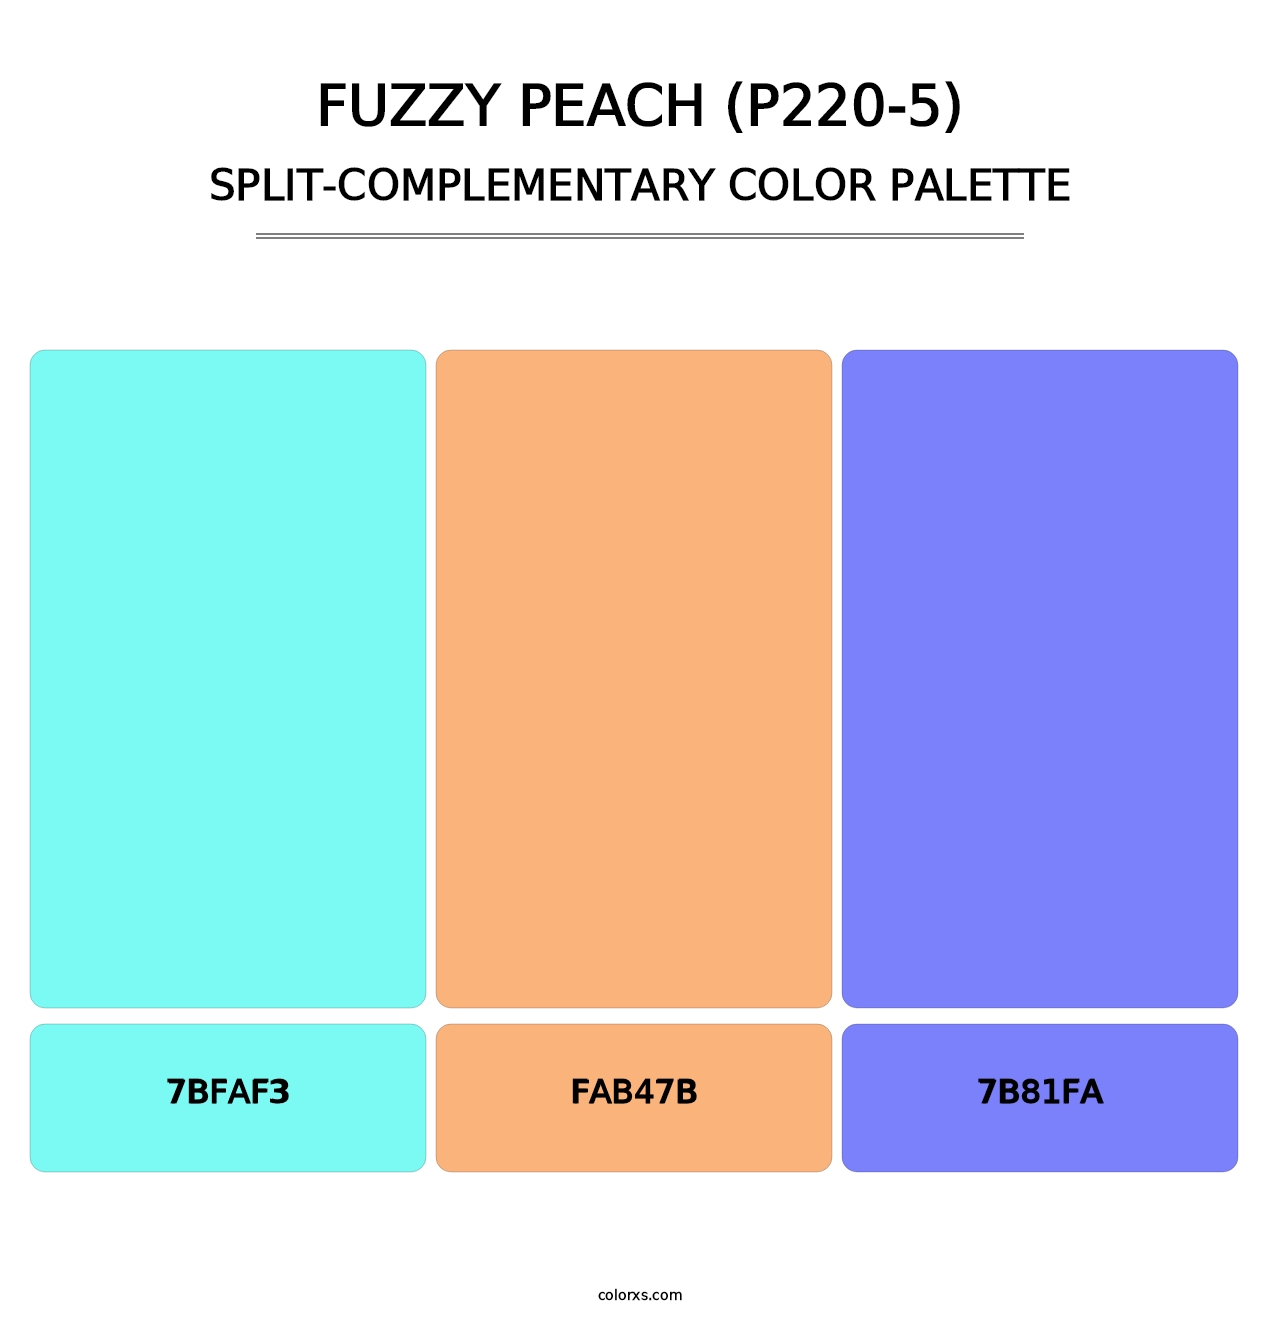 Fuzzy Peach (P220-5) - Split-Complementary Color Palette